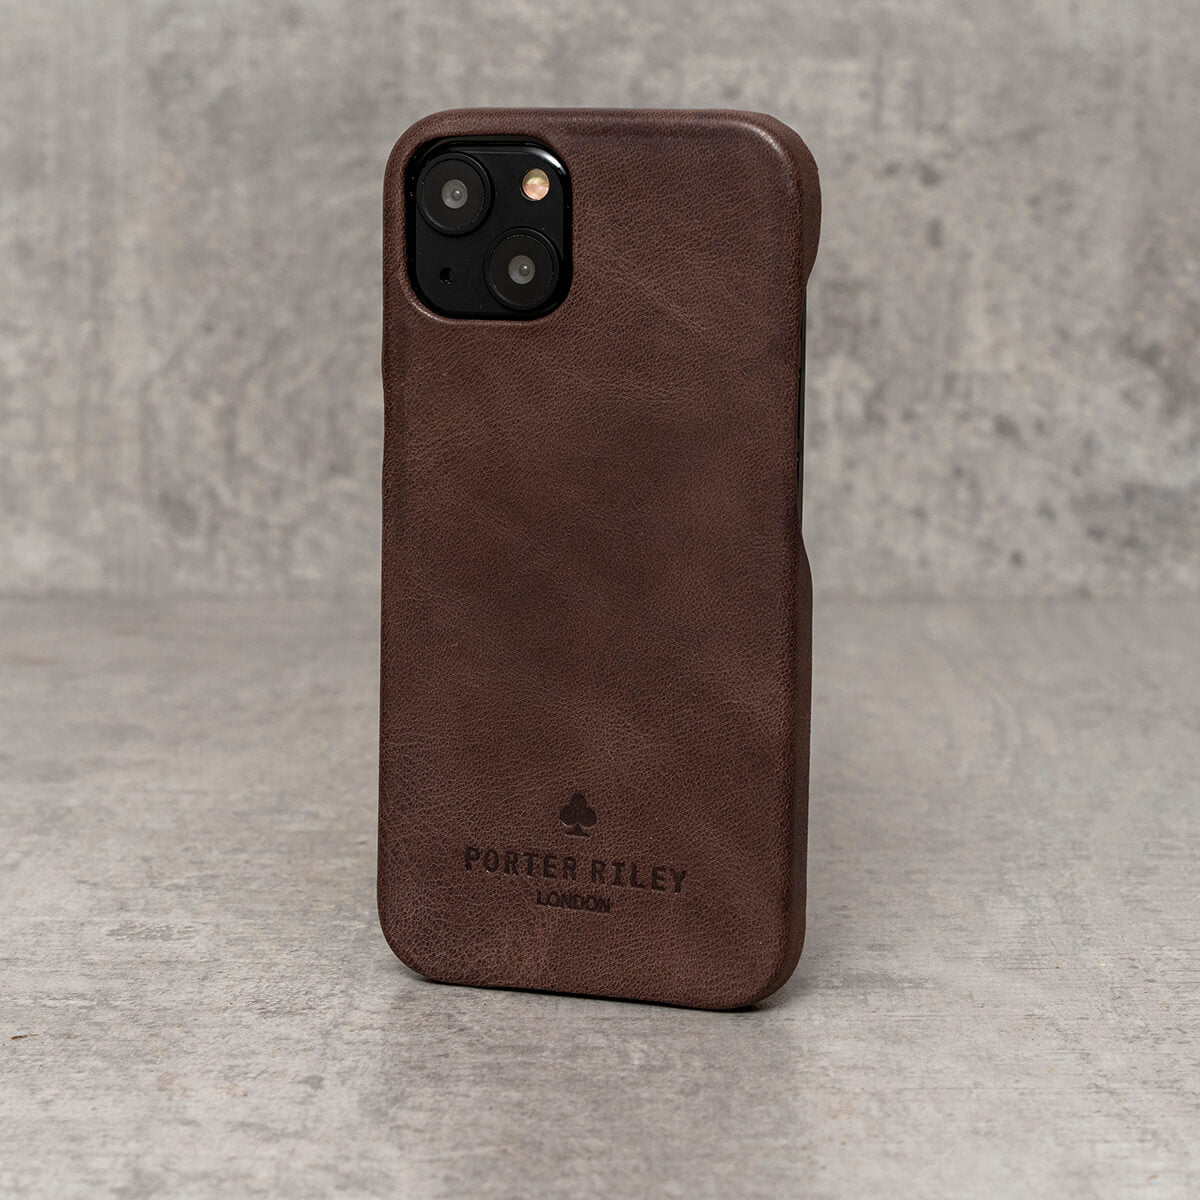 iPhone 11 Leather Case. Premium Slimline Back Genuine Leather Case (Chocolate Brown)